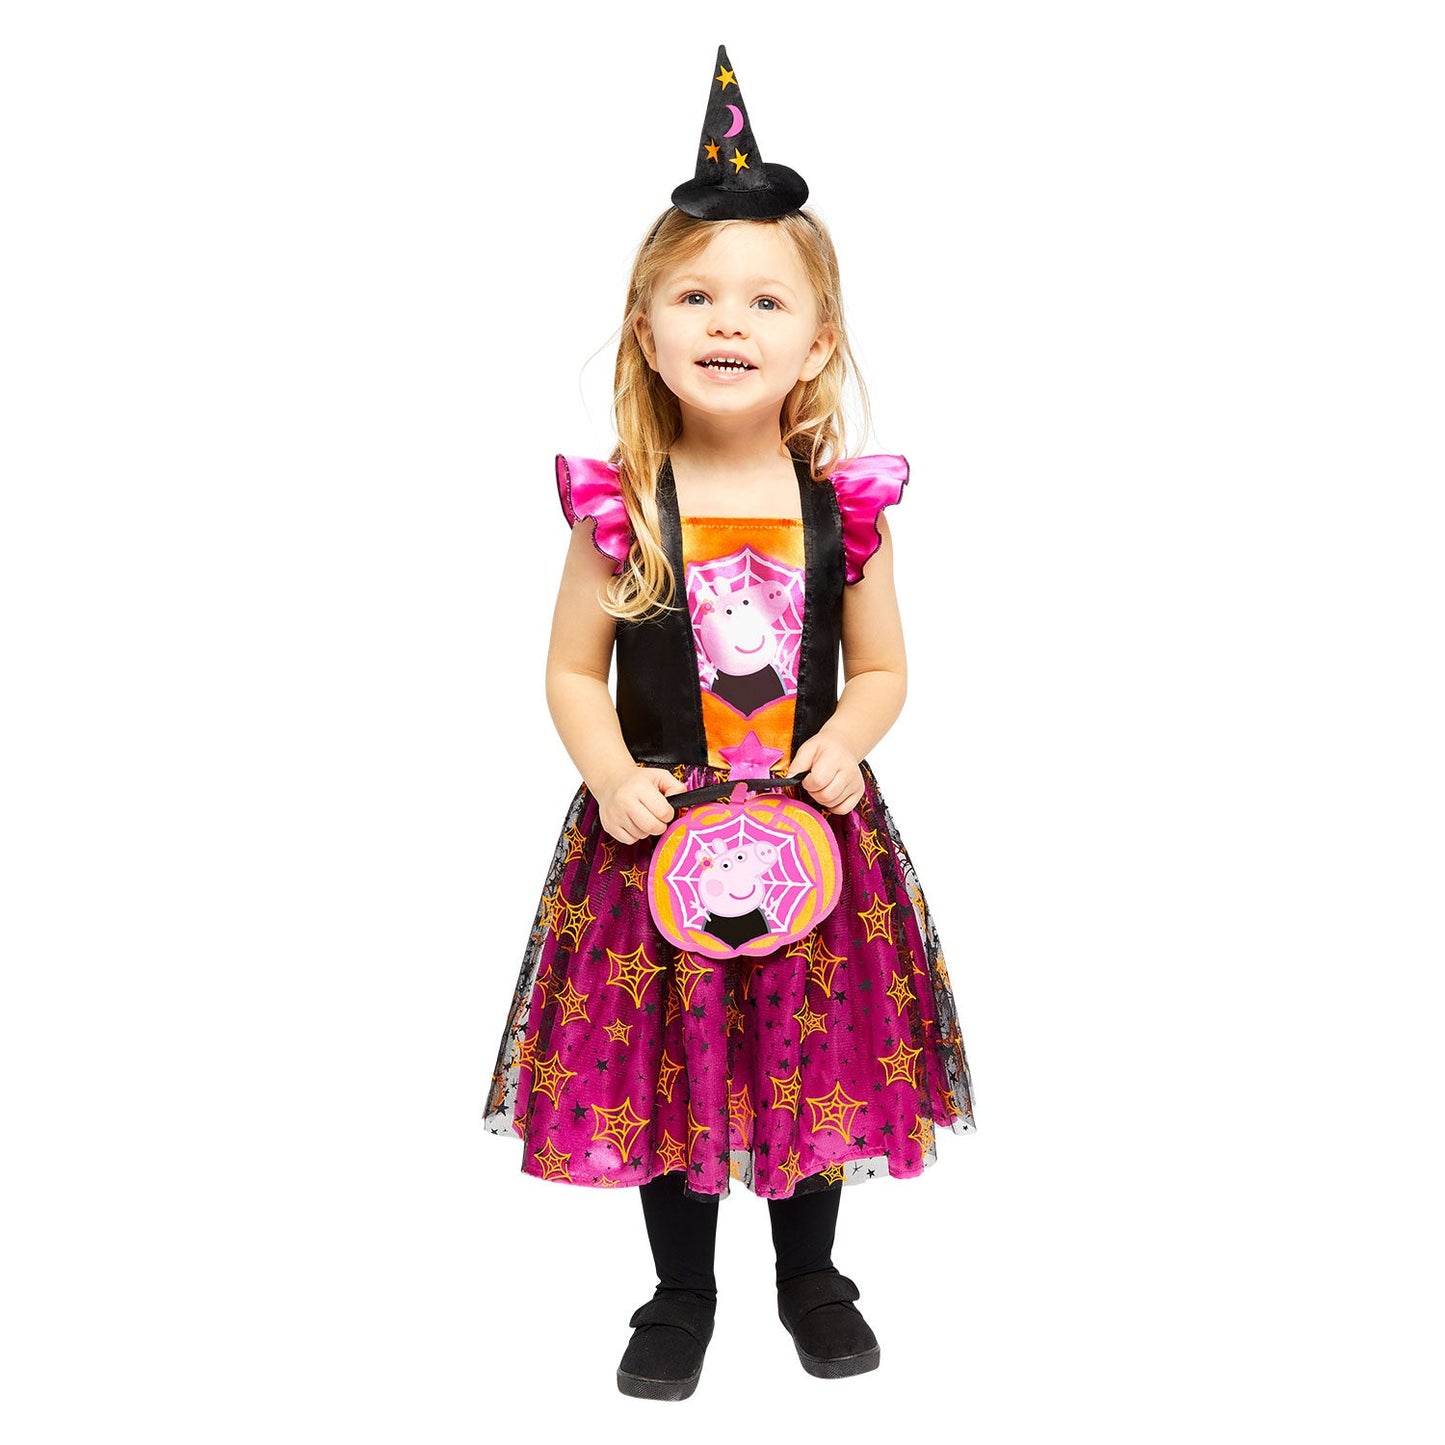 Peppa Pig Witch Costume includes dress, mini hat headband and bag